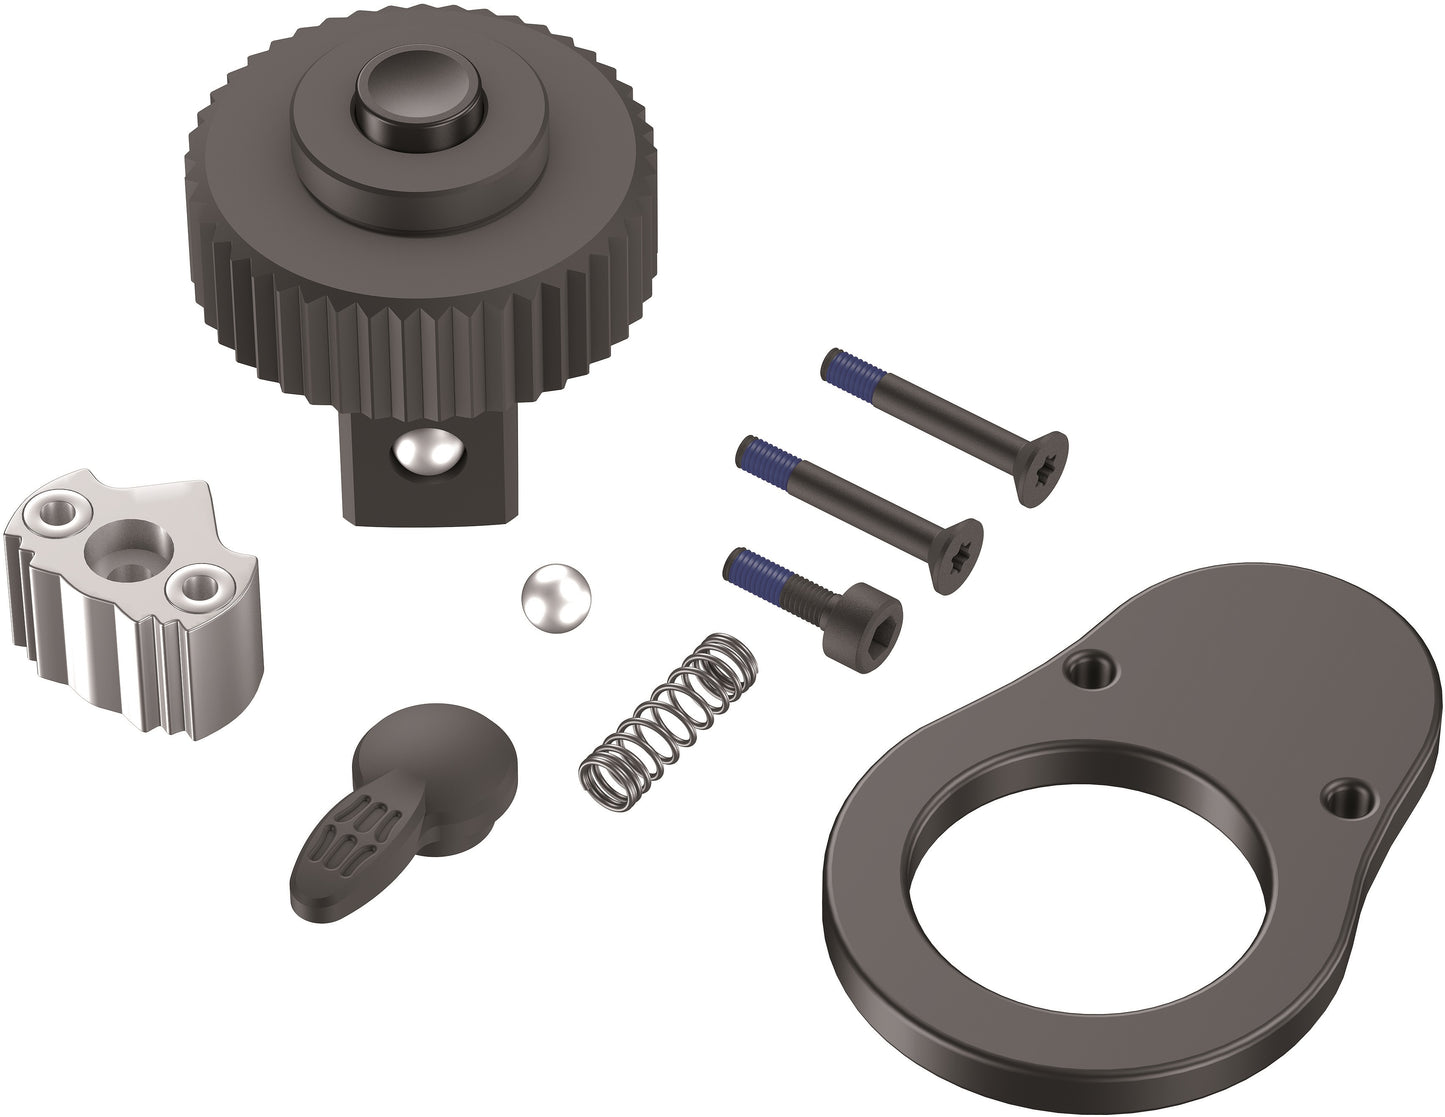 wera 9905 c 2 click torque ratchet wrench repair kit 1/2" 05547630001